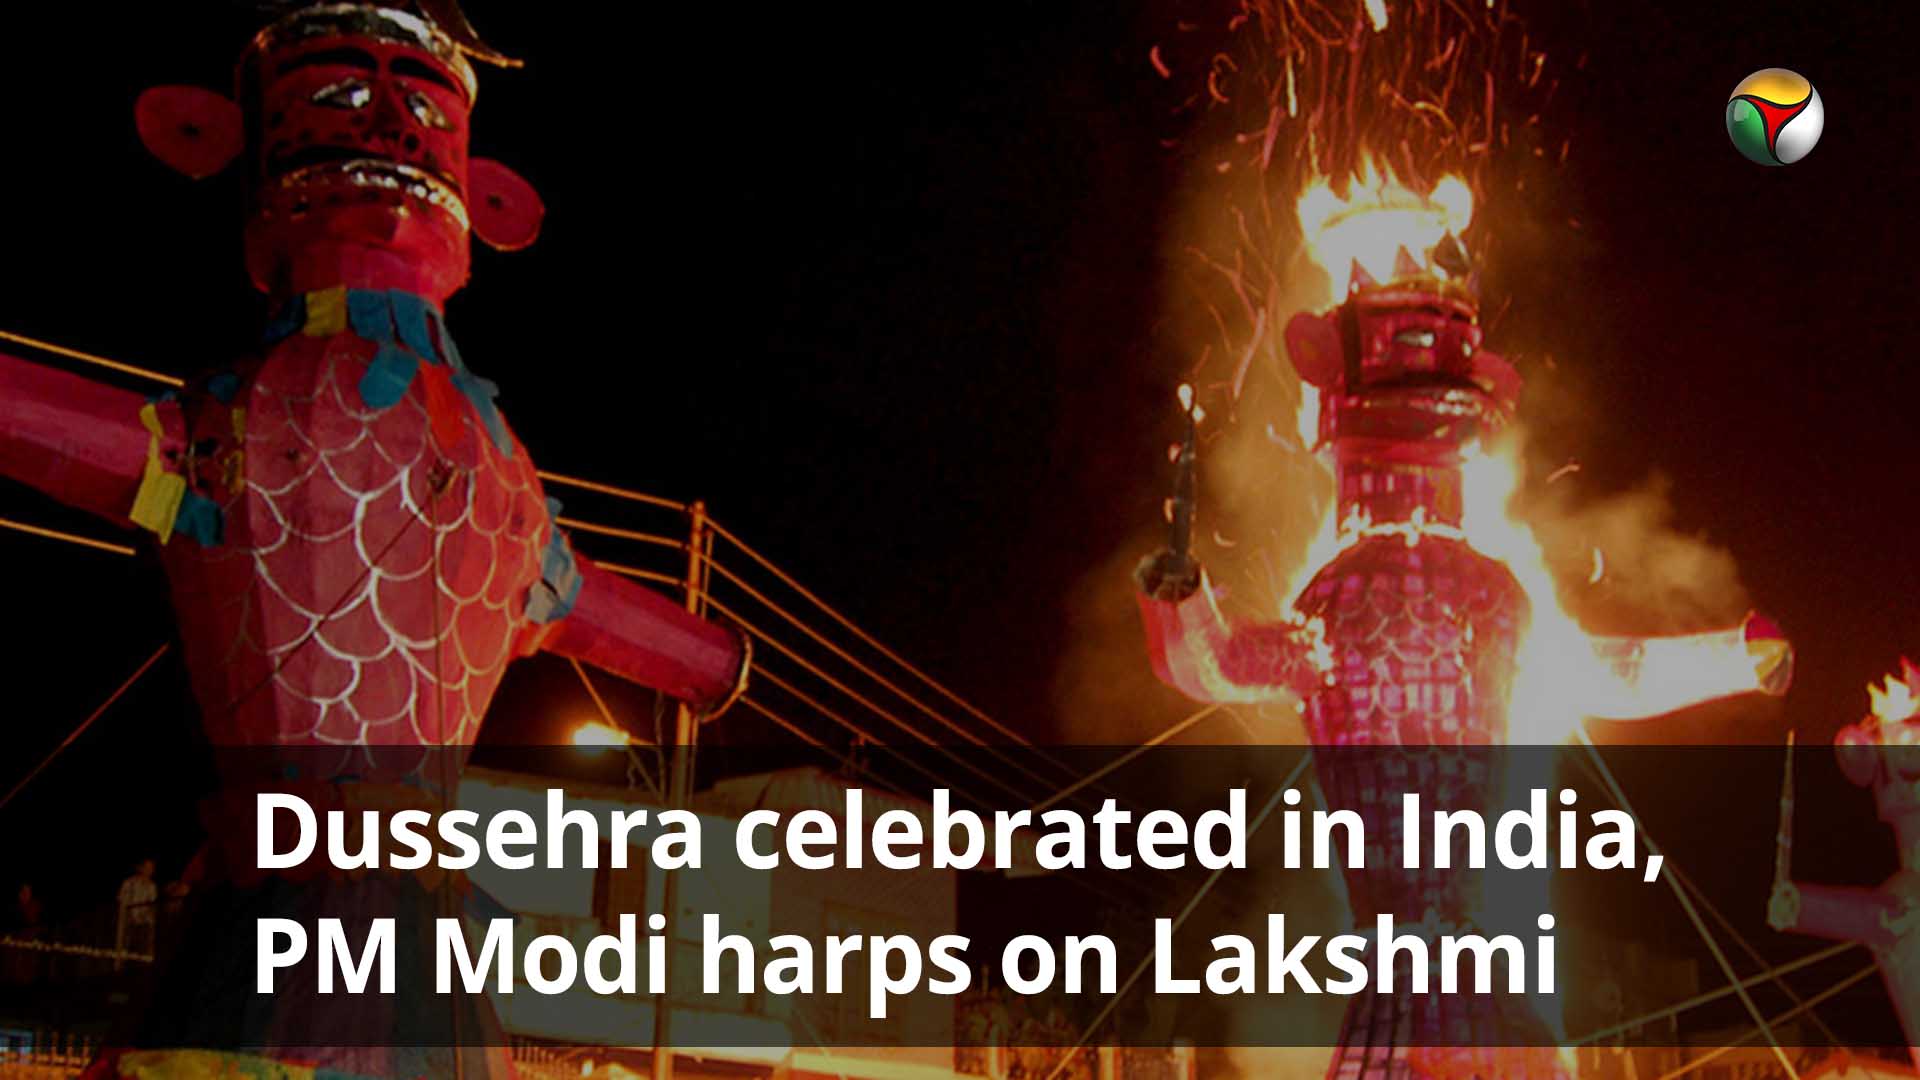 Dussehra celebrated in India, PM Modi harps on Lakshmi